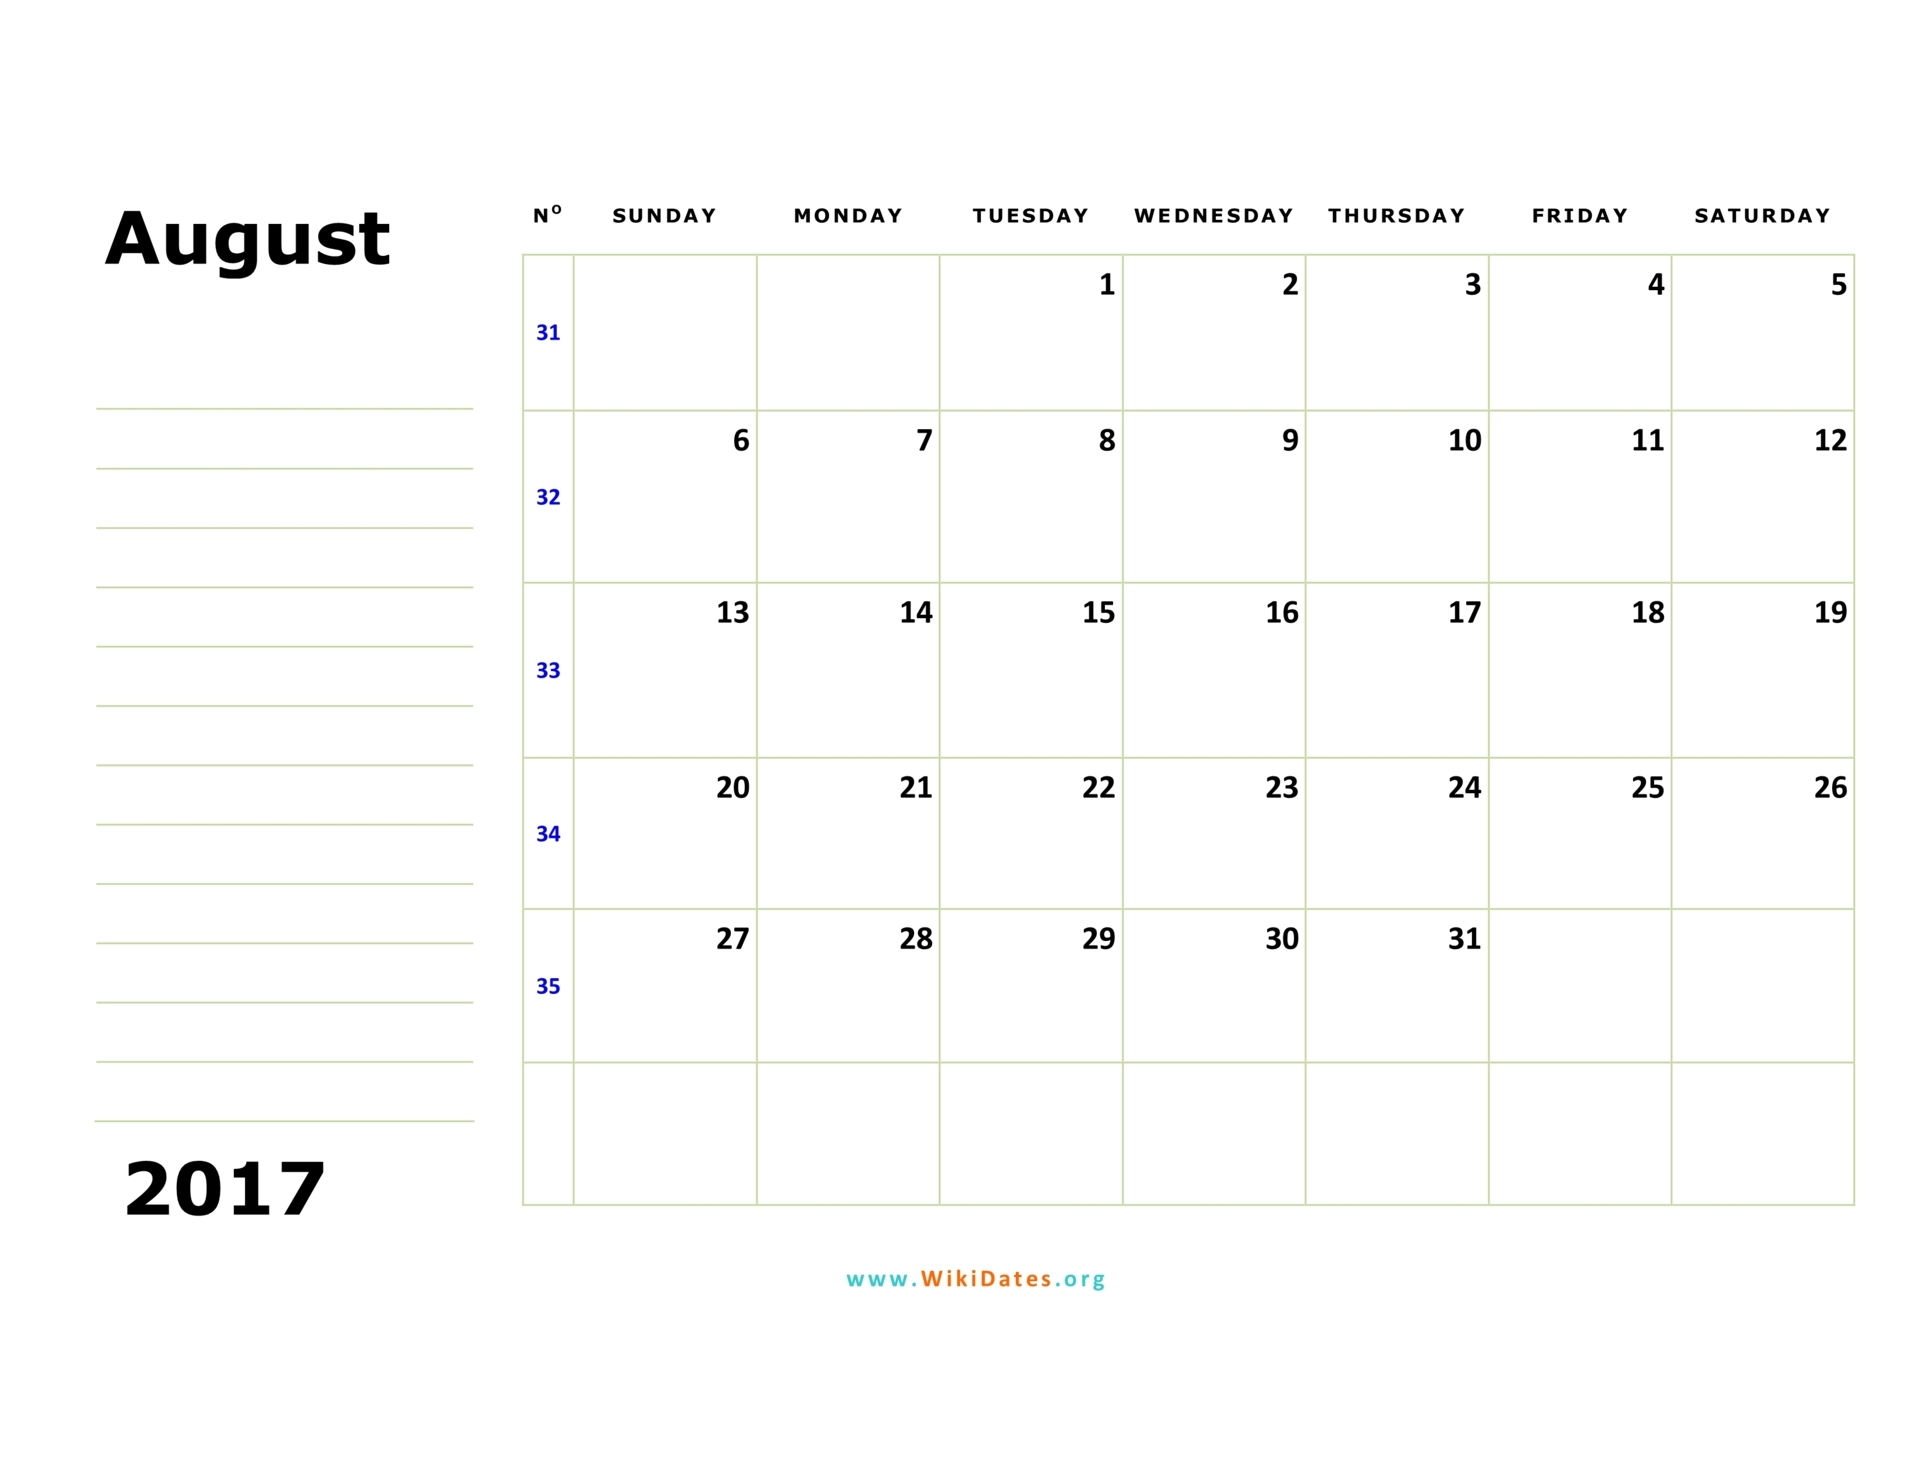 august-2017-calendar-wikidates